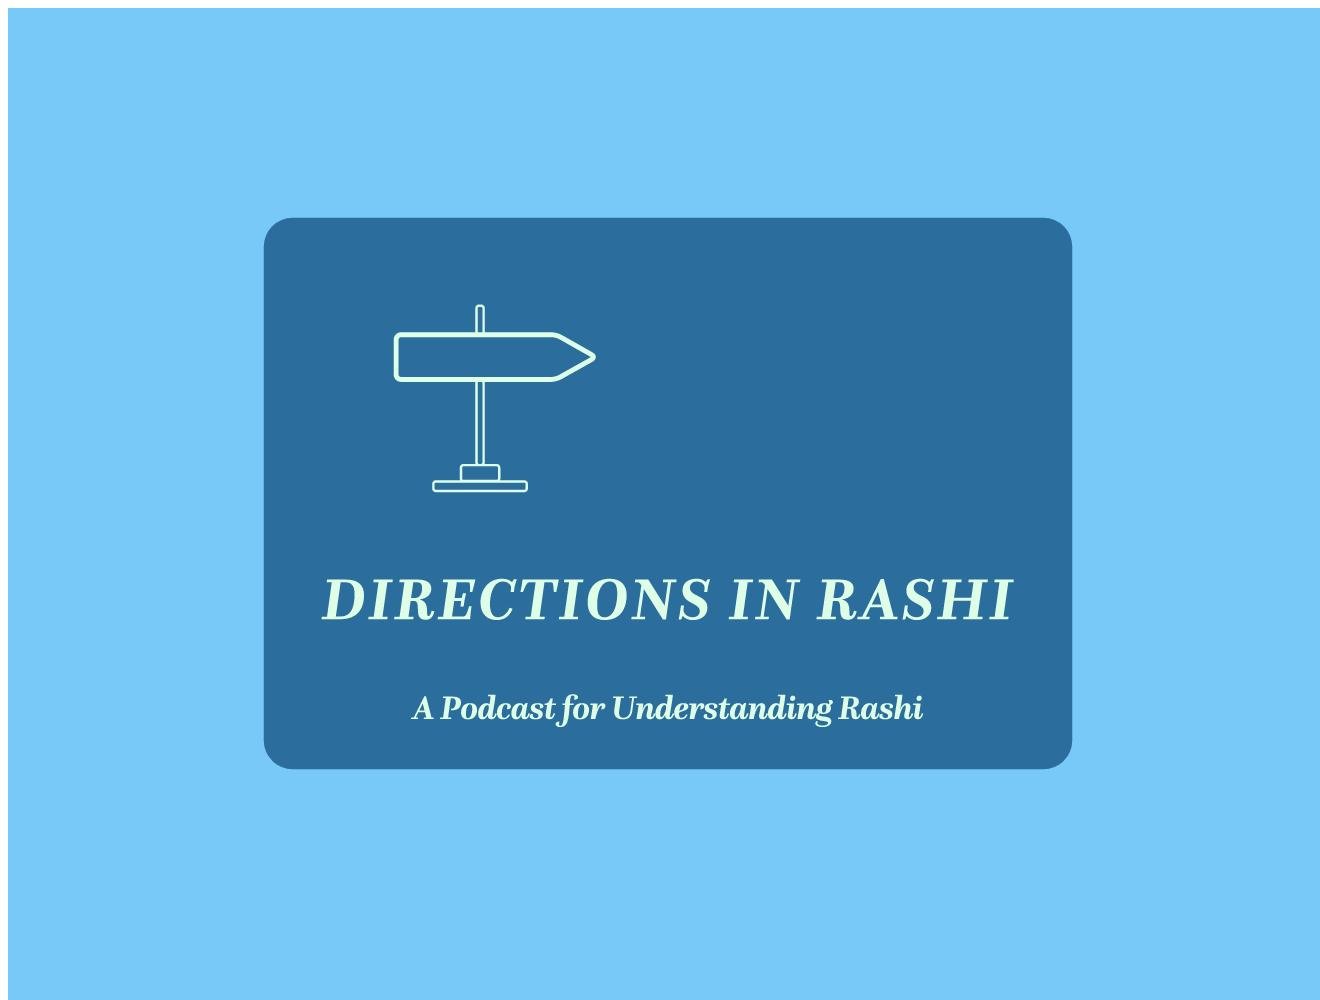 Books: Directions in Rashi, Hamikraos al Sidram, Hakol Bi'chtav
To purchase, go to: 
https://t.co/ufBmSK52mW